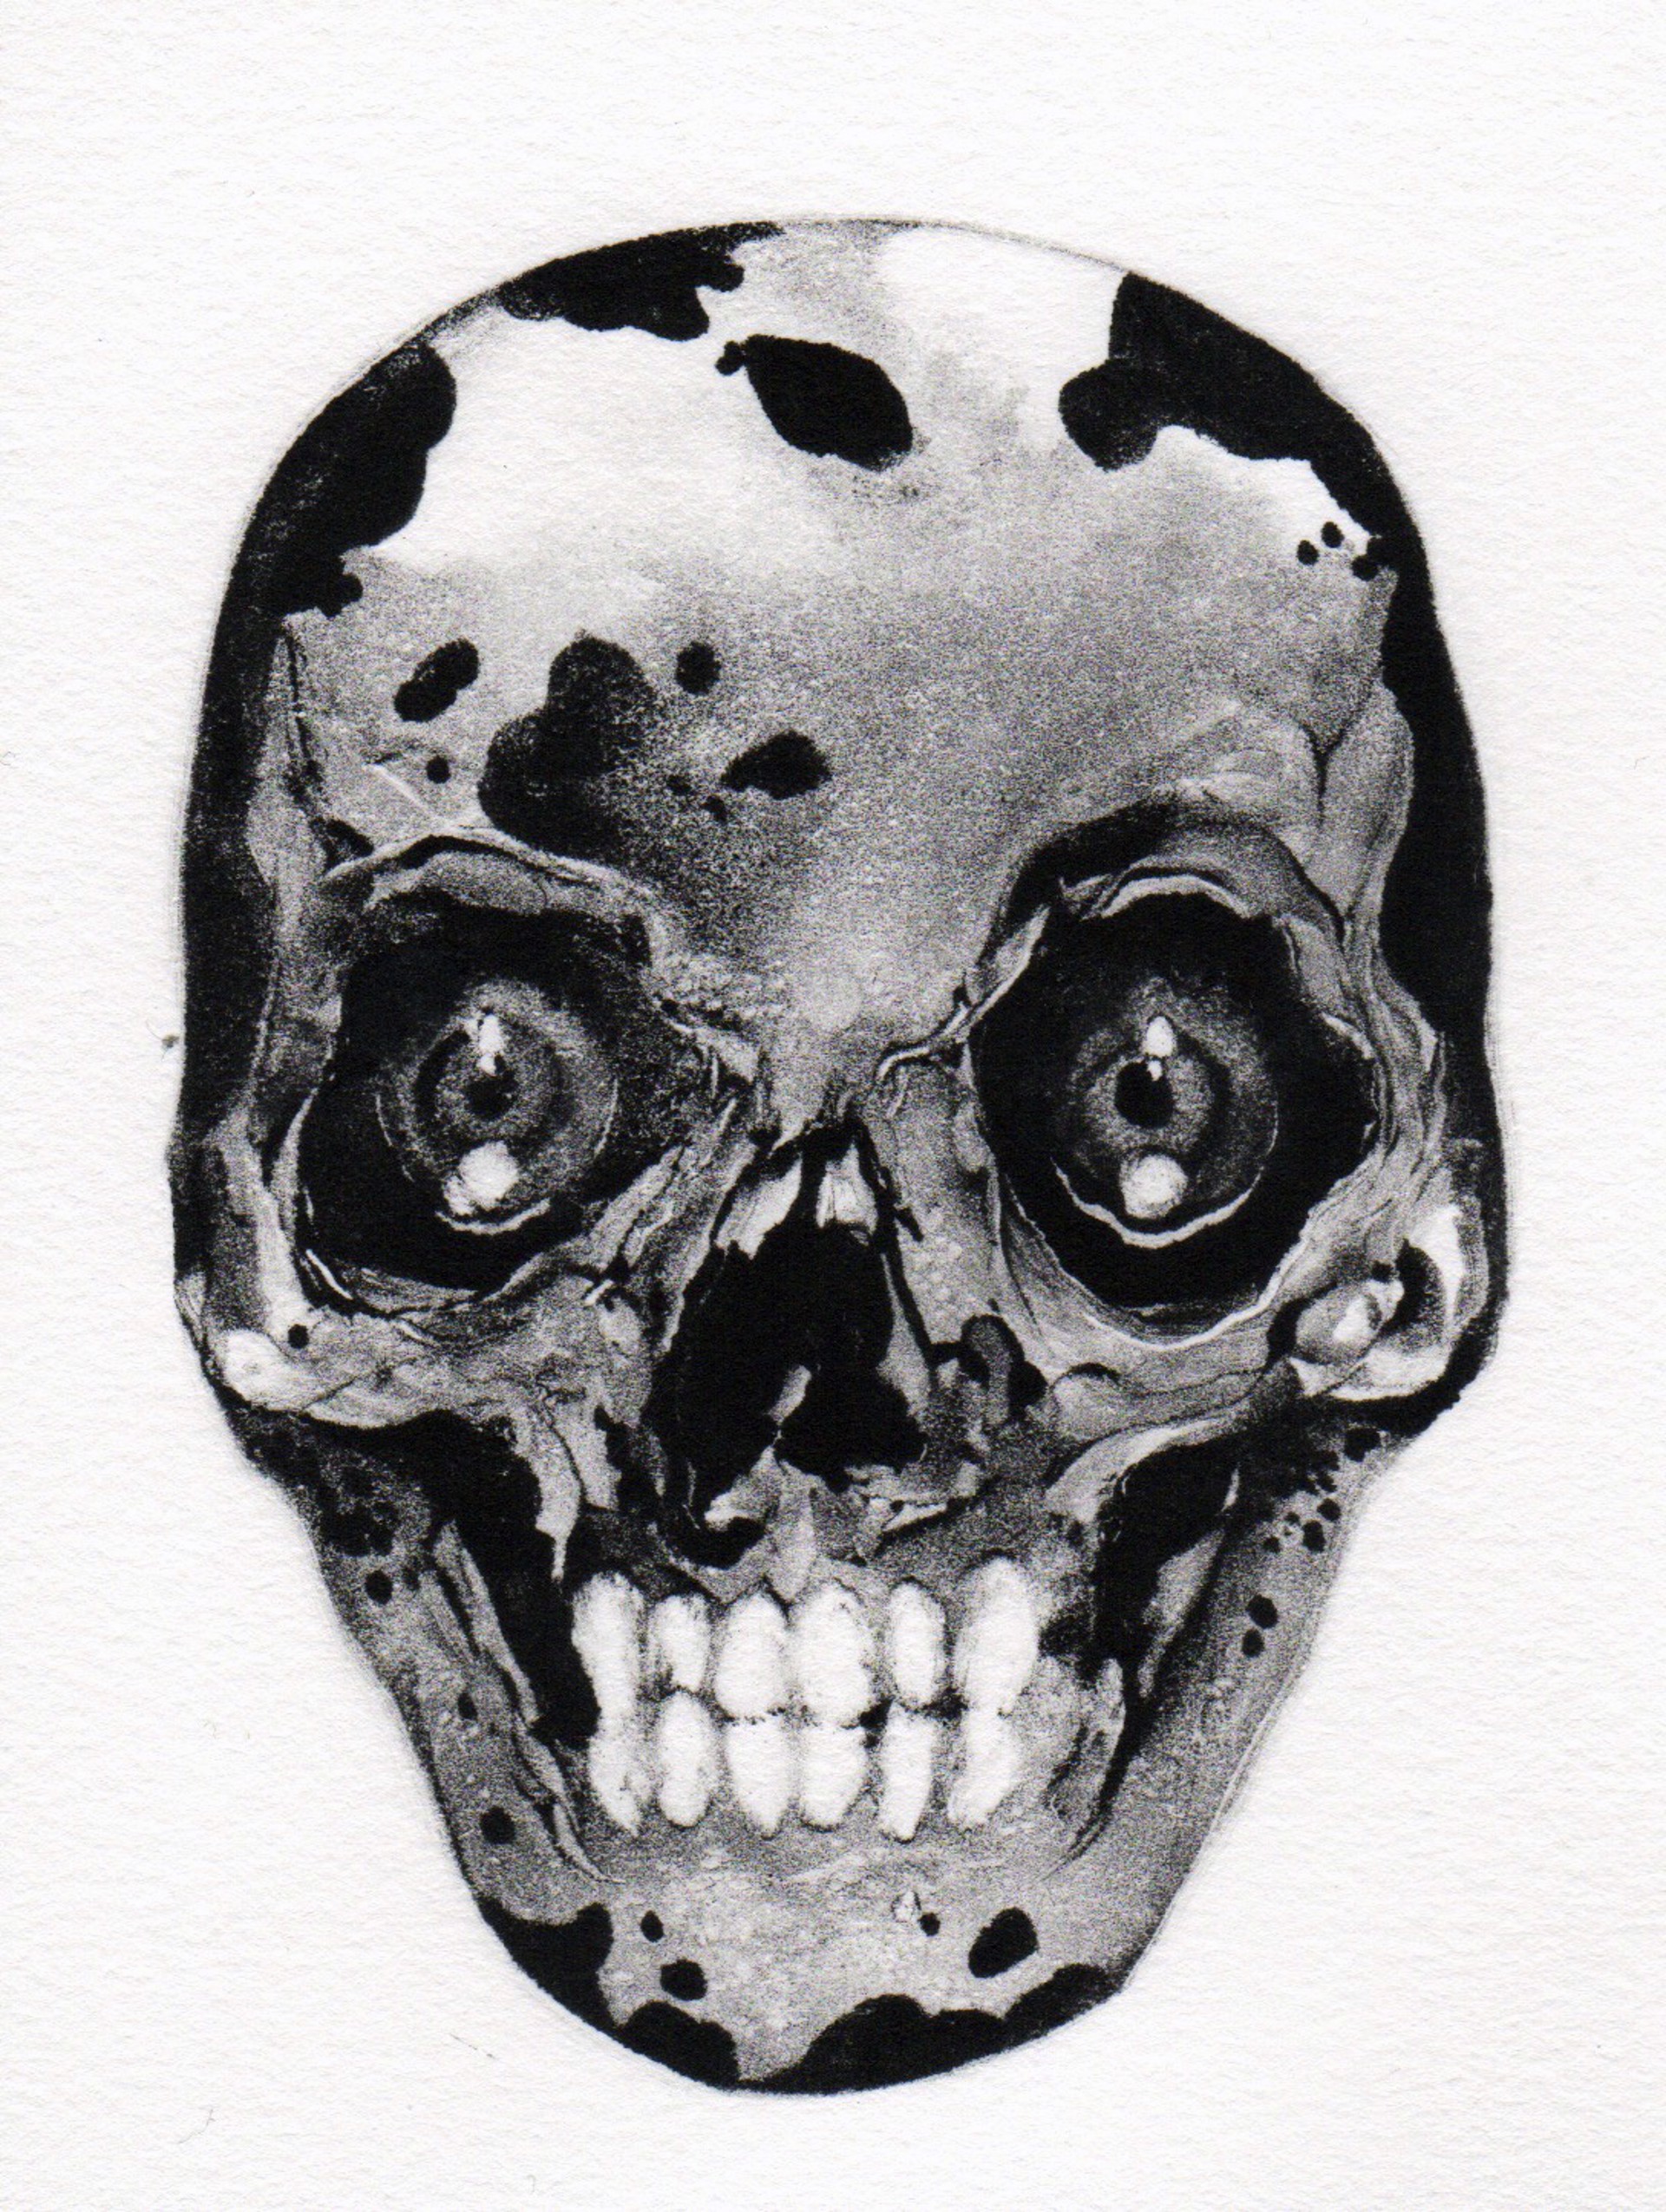 Variations on a theme 2 (skull) by Grady Gordon